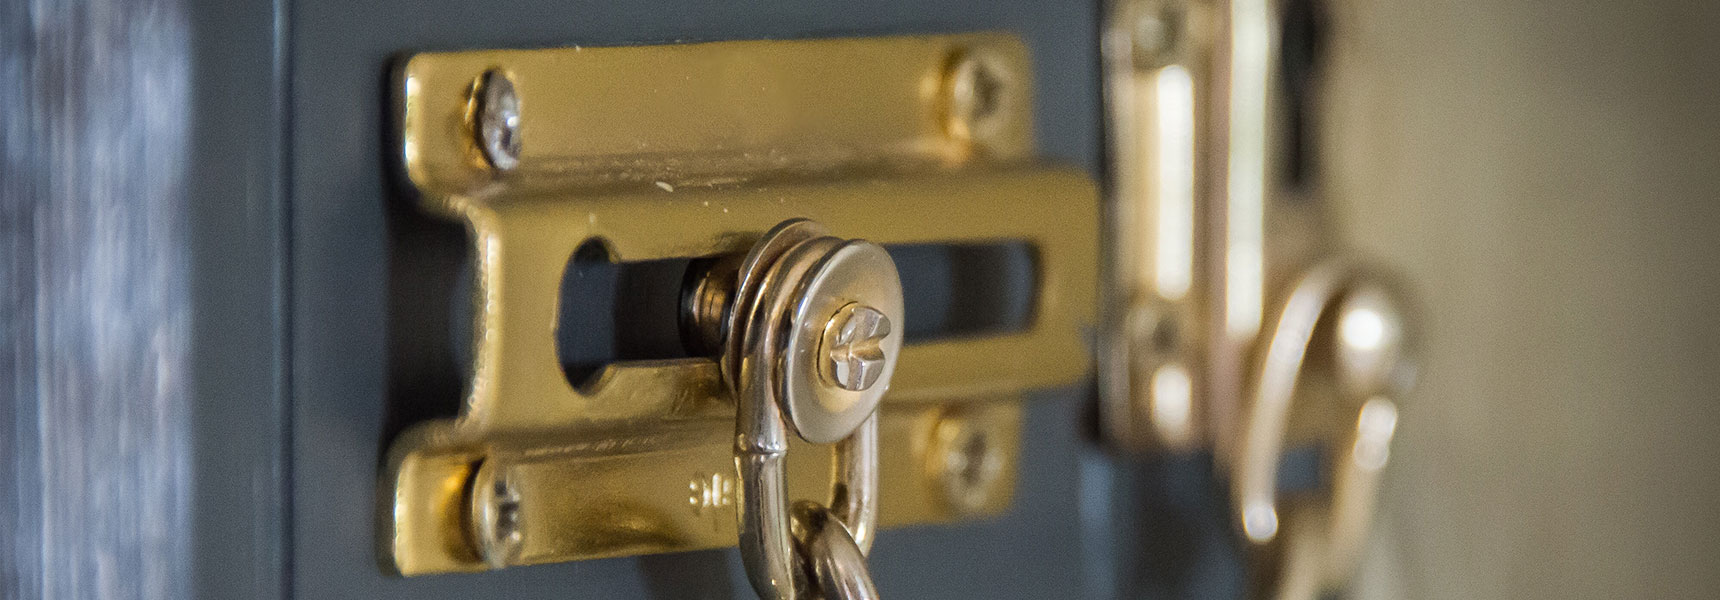 What Should We Consider When Choosing A Security Door?